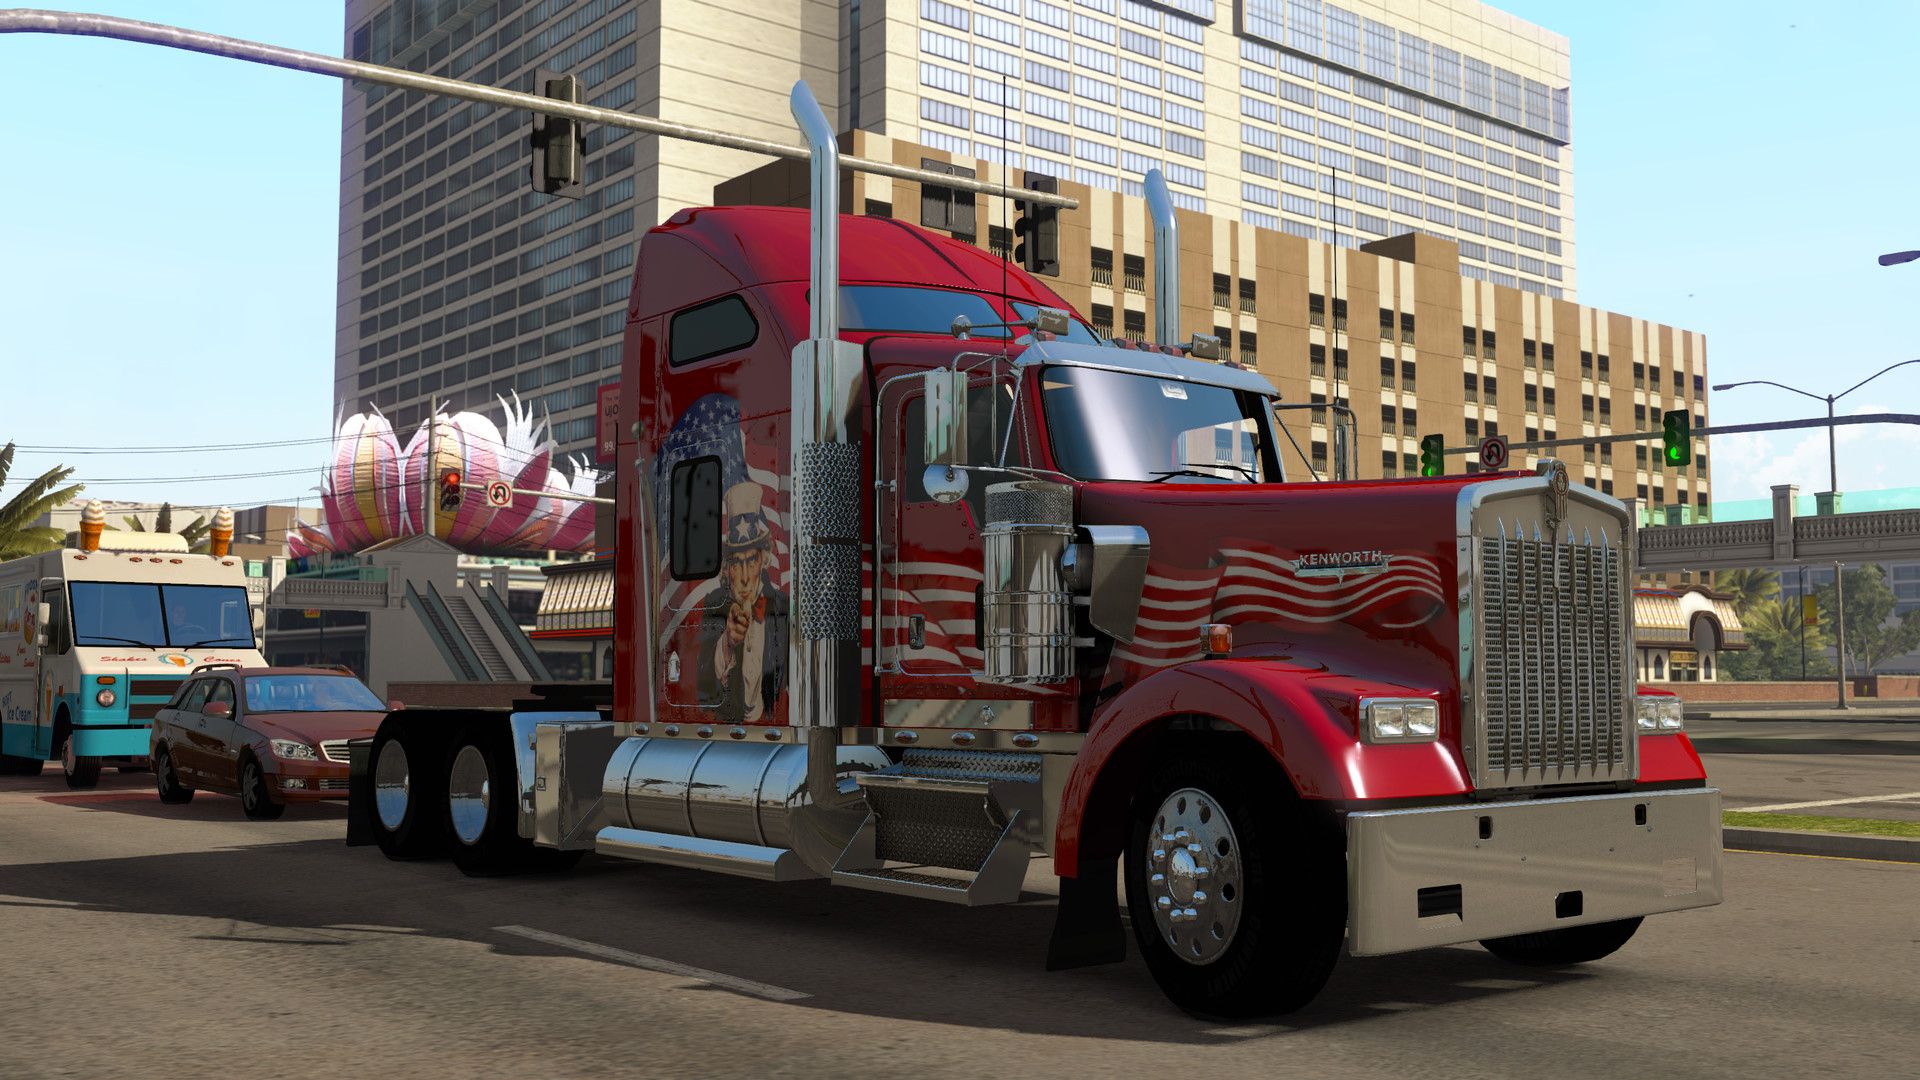 American Truck Simulator trailer shows trucking in the USA